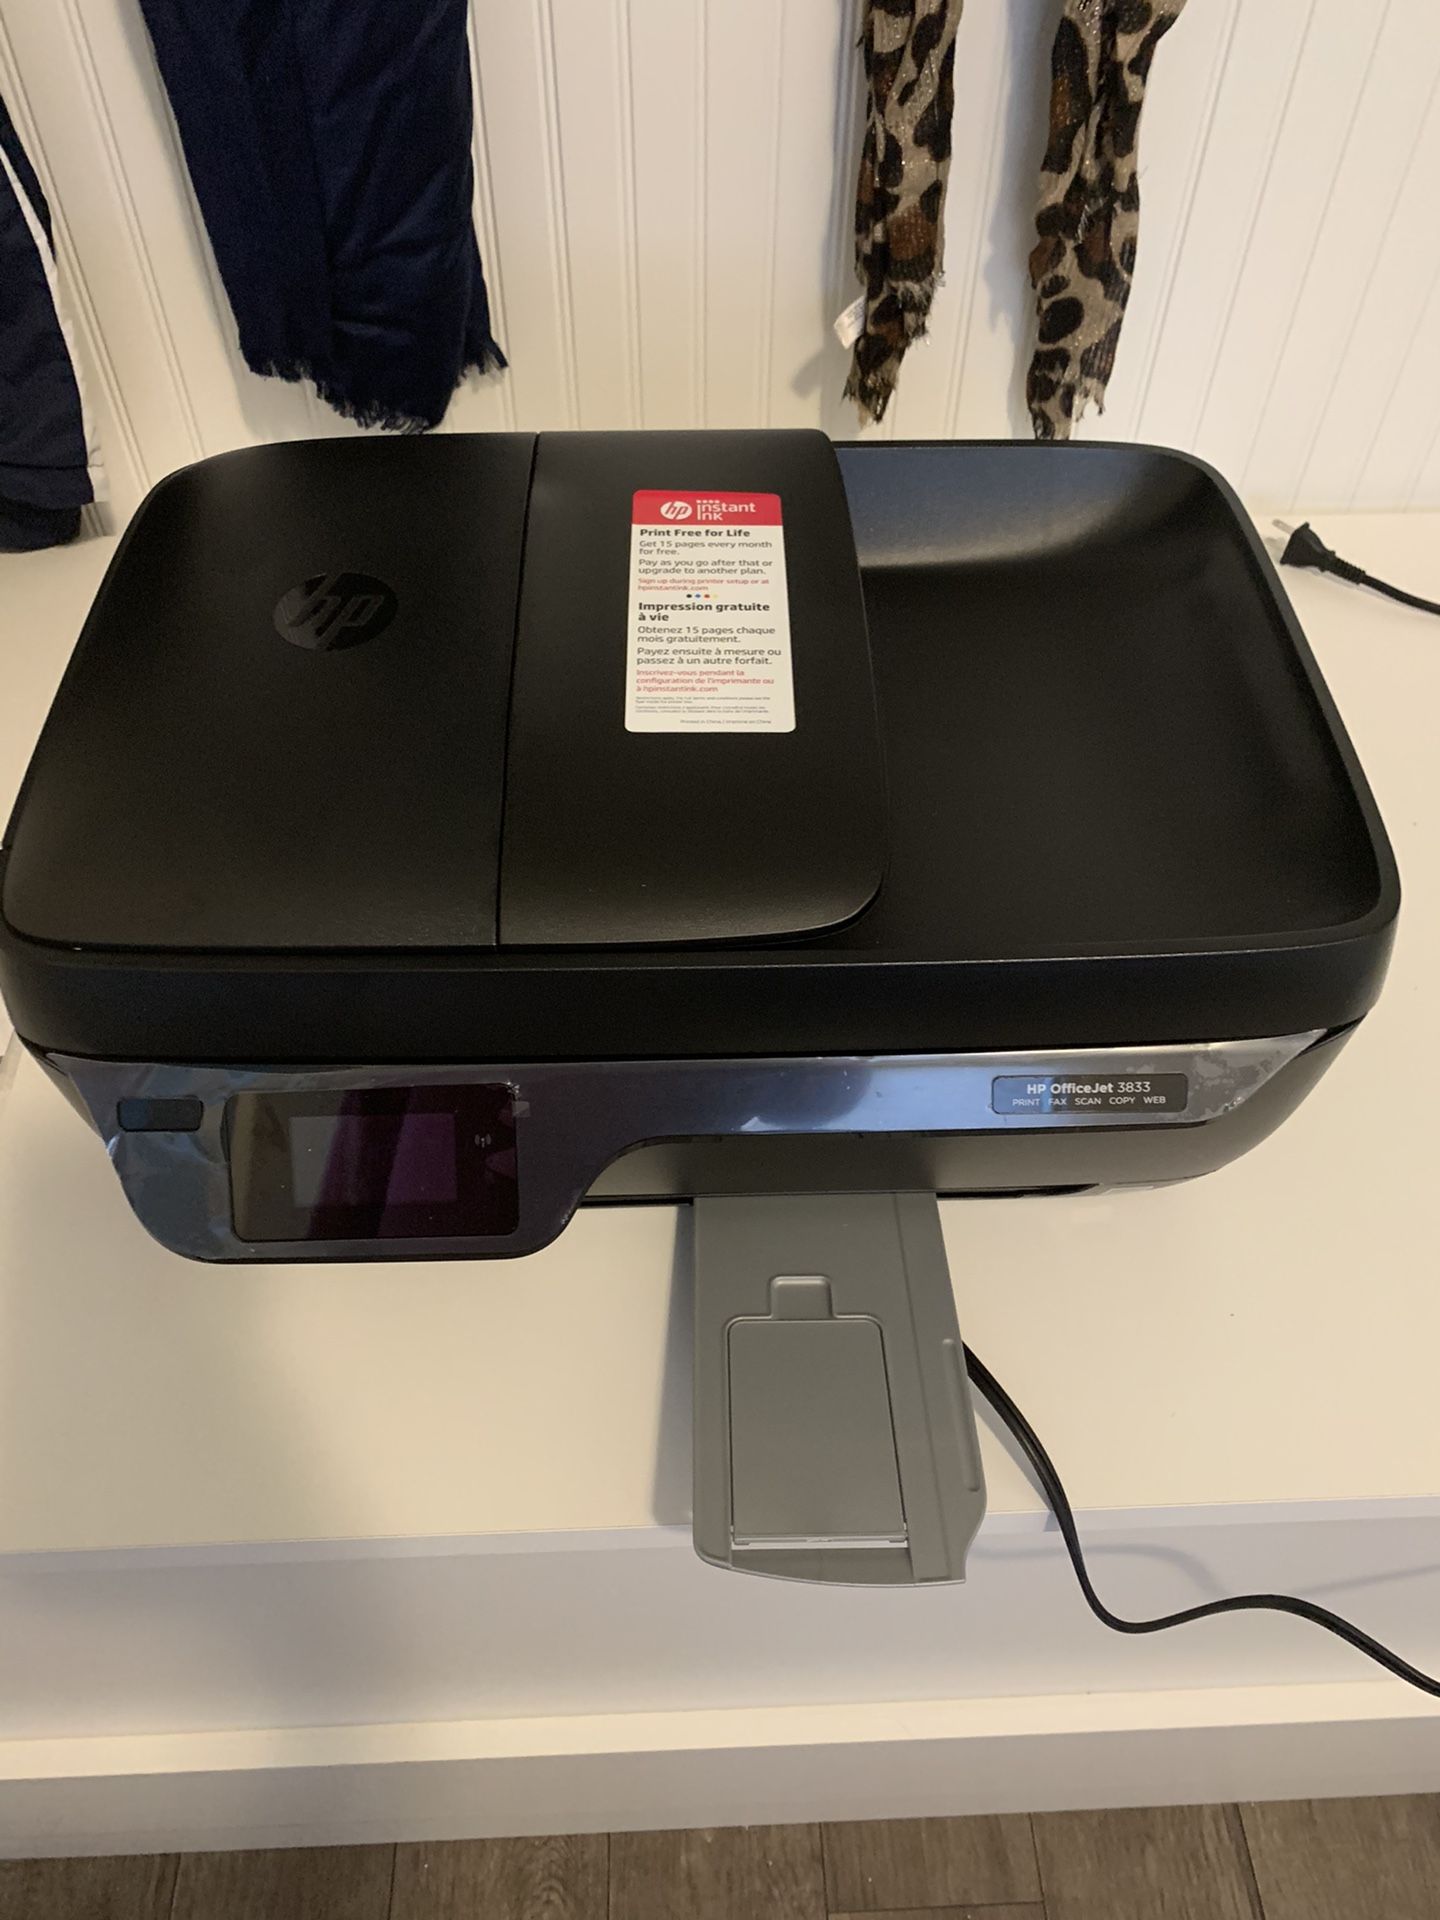 HP Office Jet 3833 Printer